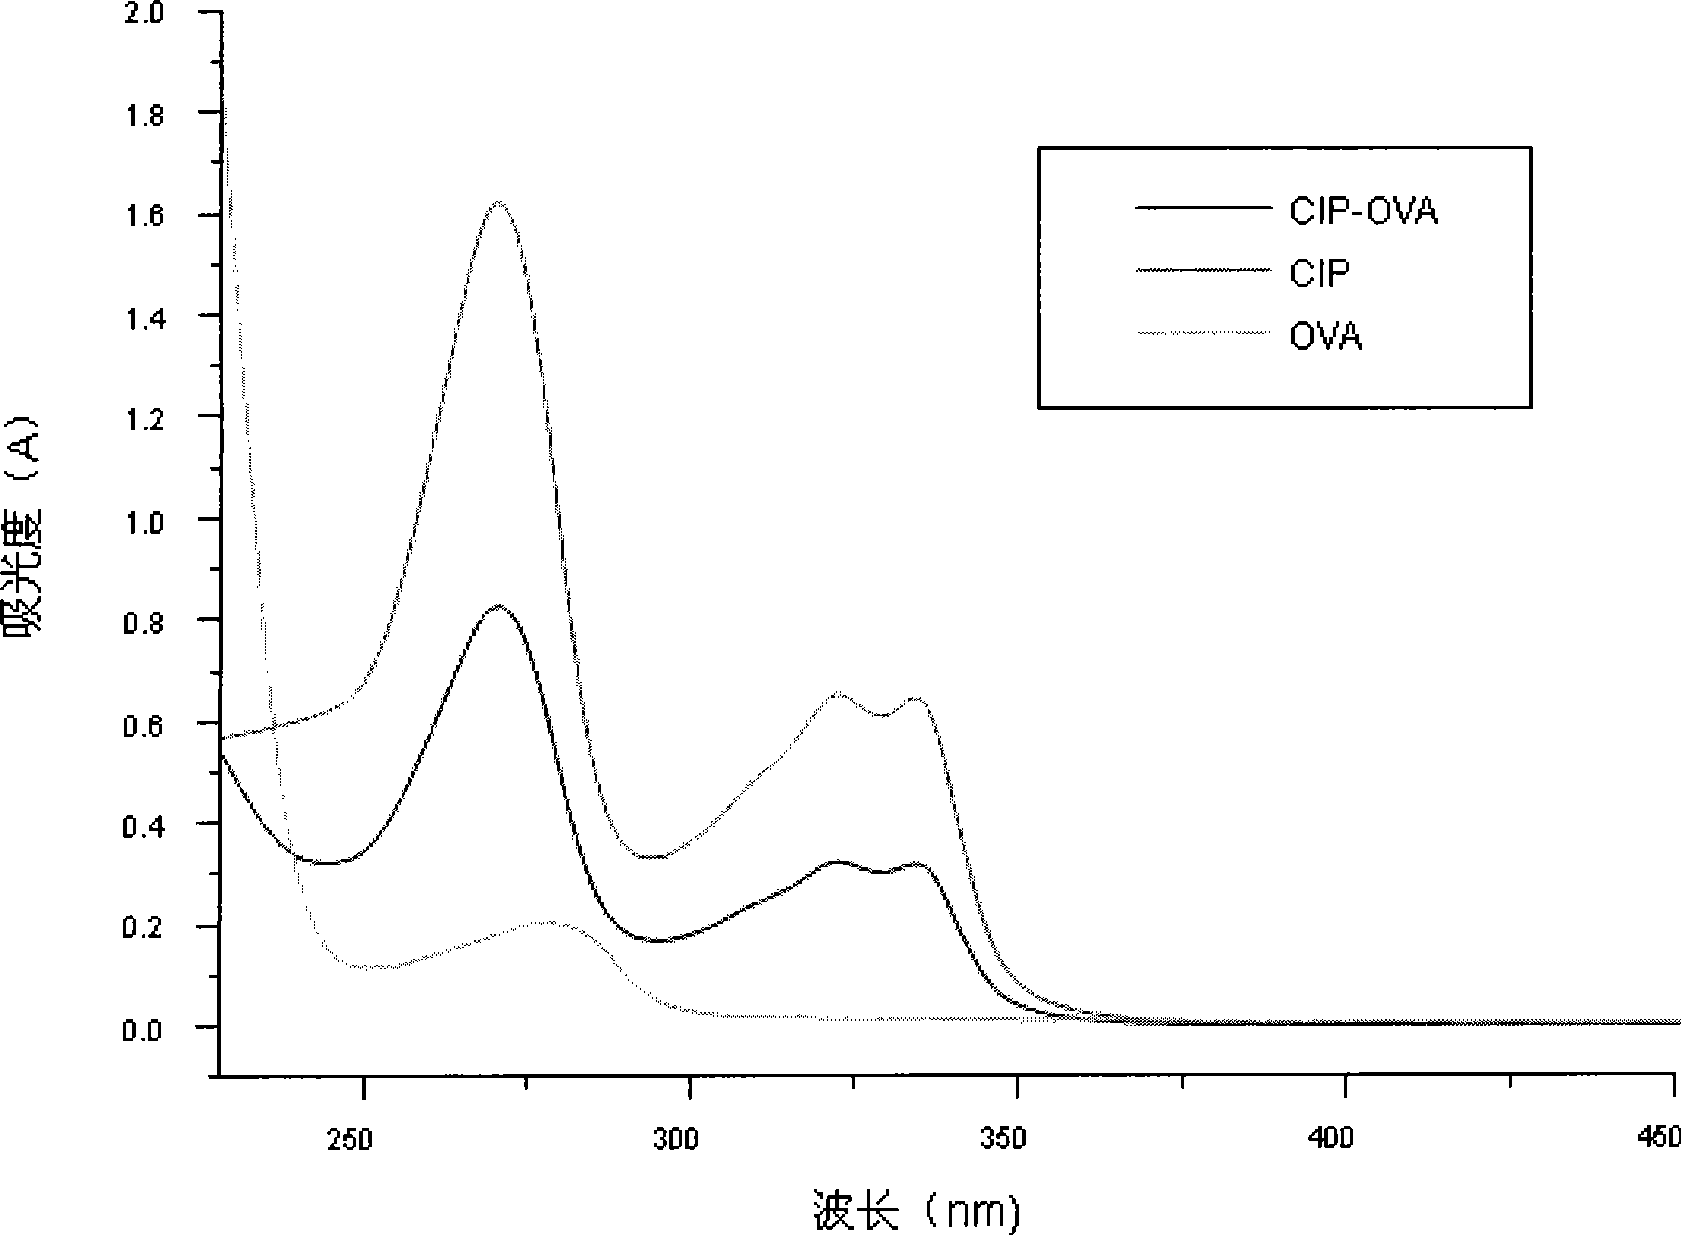 Chemical luminescence ELISA detection reagent kit of ciprofloxacin